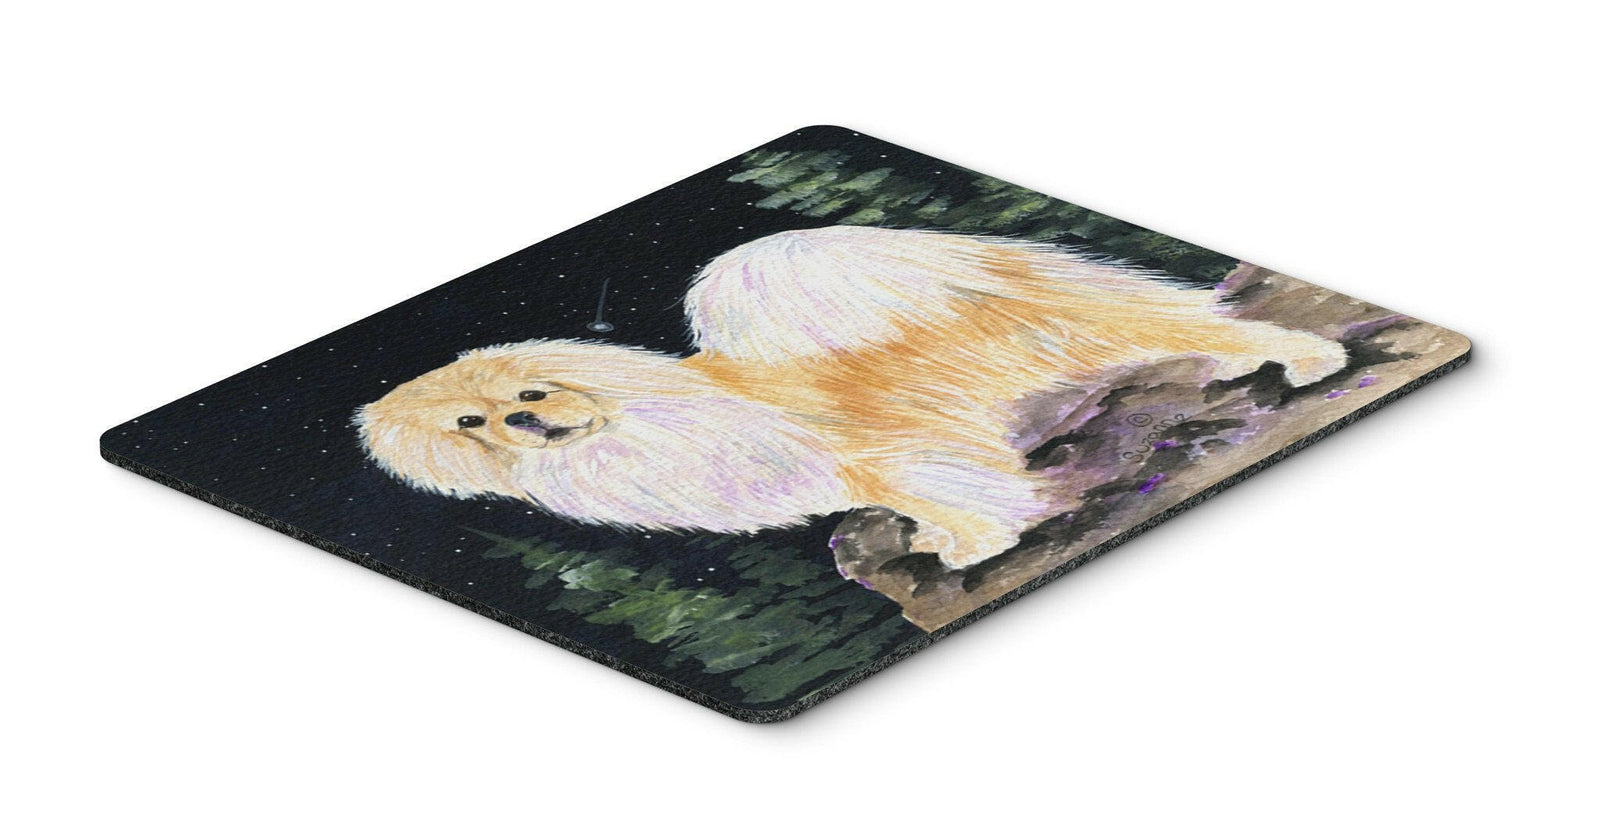 Starry Night Tibetan Spaniel Mouse Pad / Hot Pad / Trivet by Caroline's Treasures